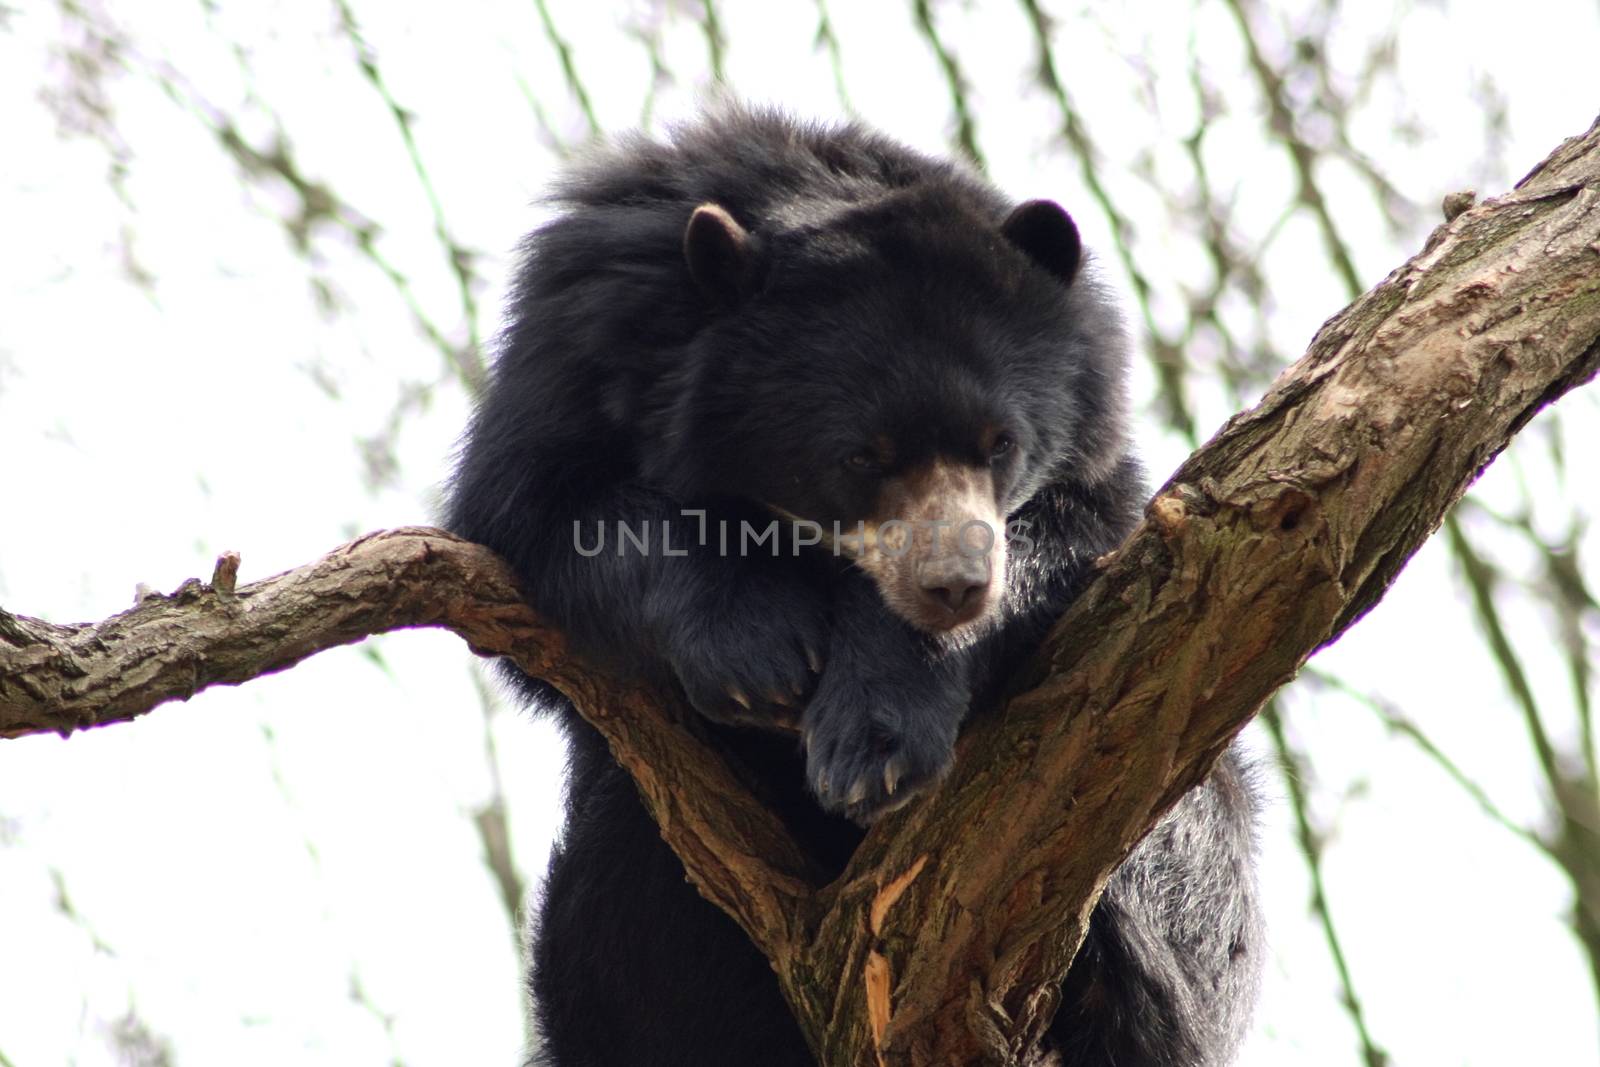 Spectacled bear (Tremarctos ornatus) by hadot